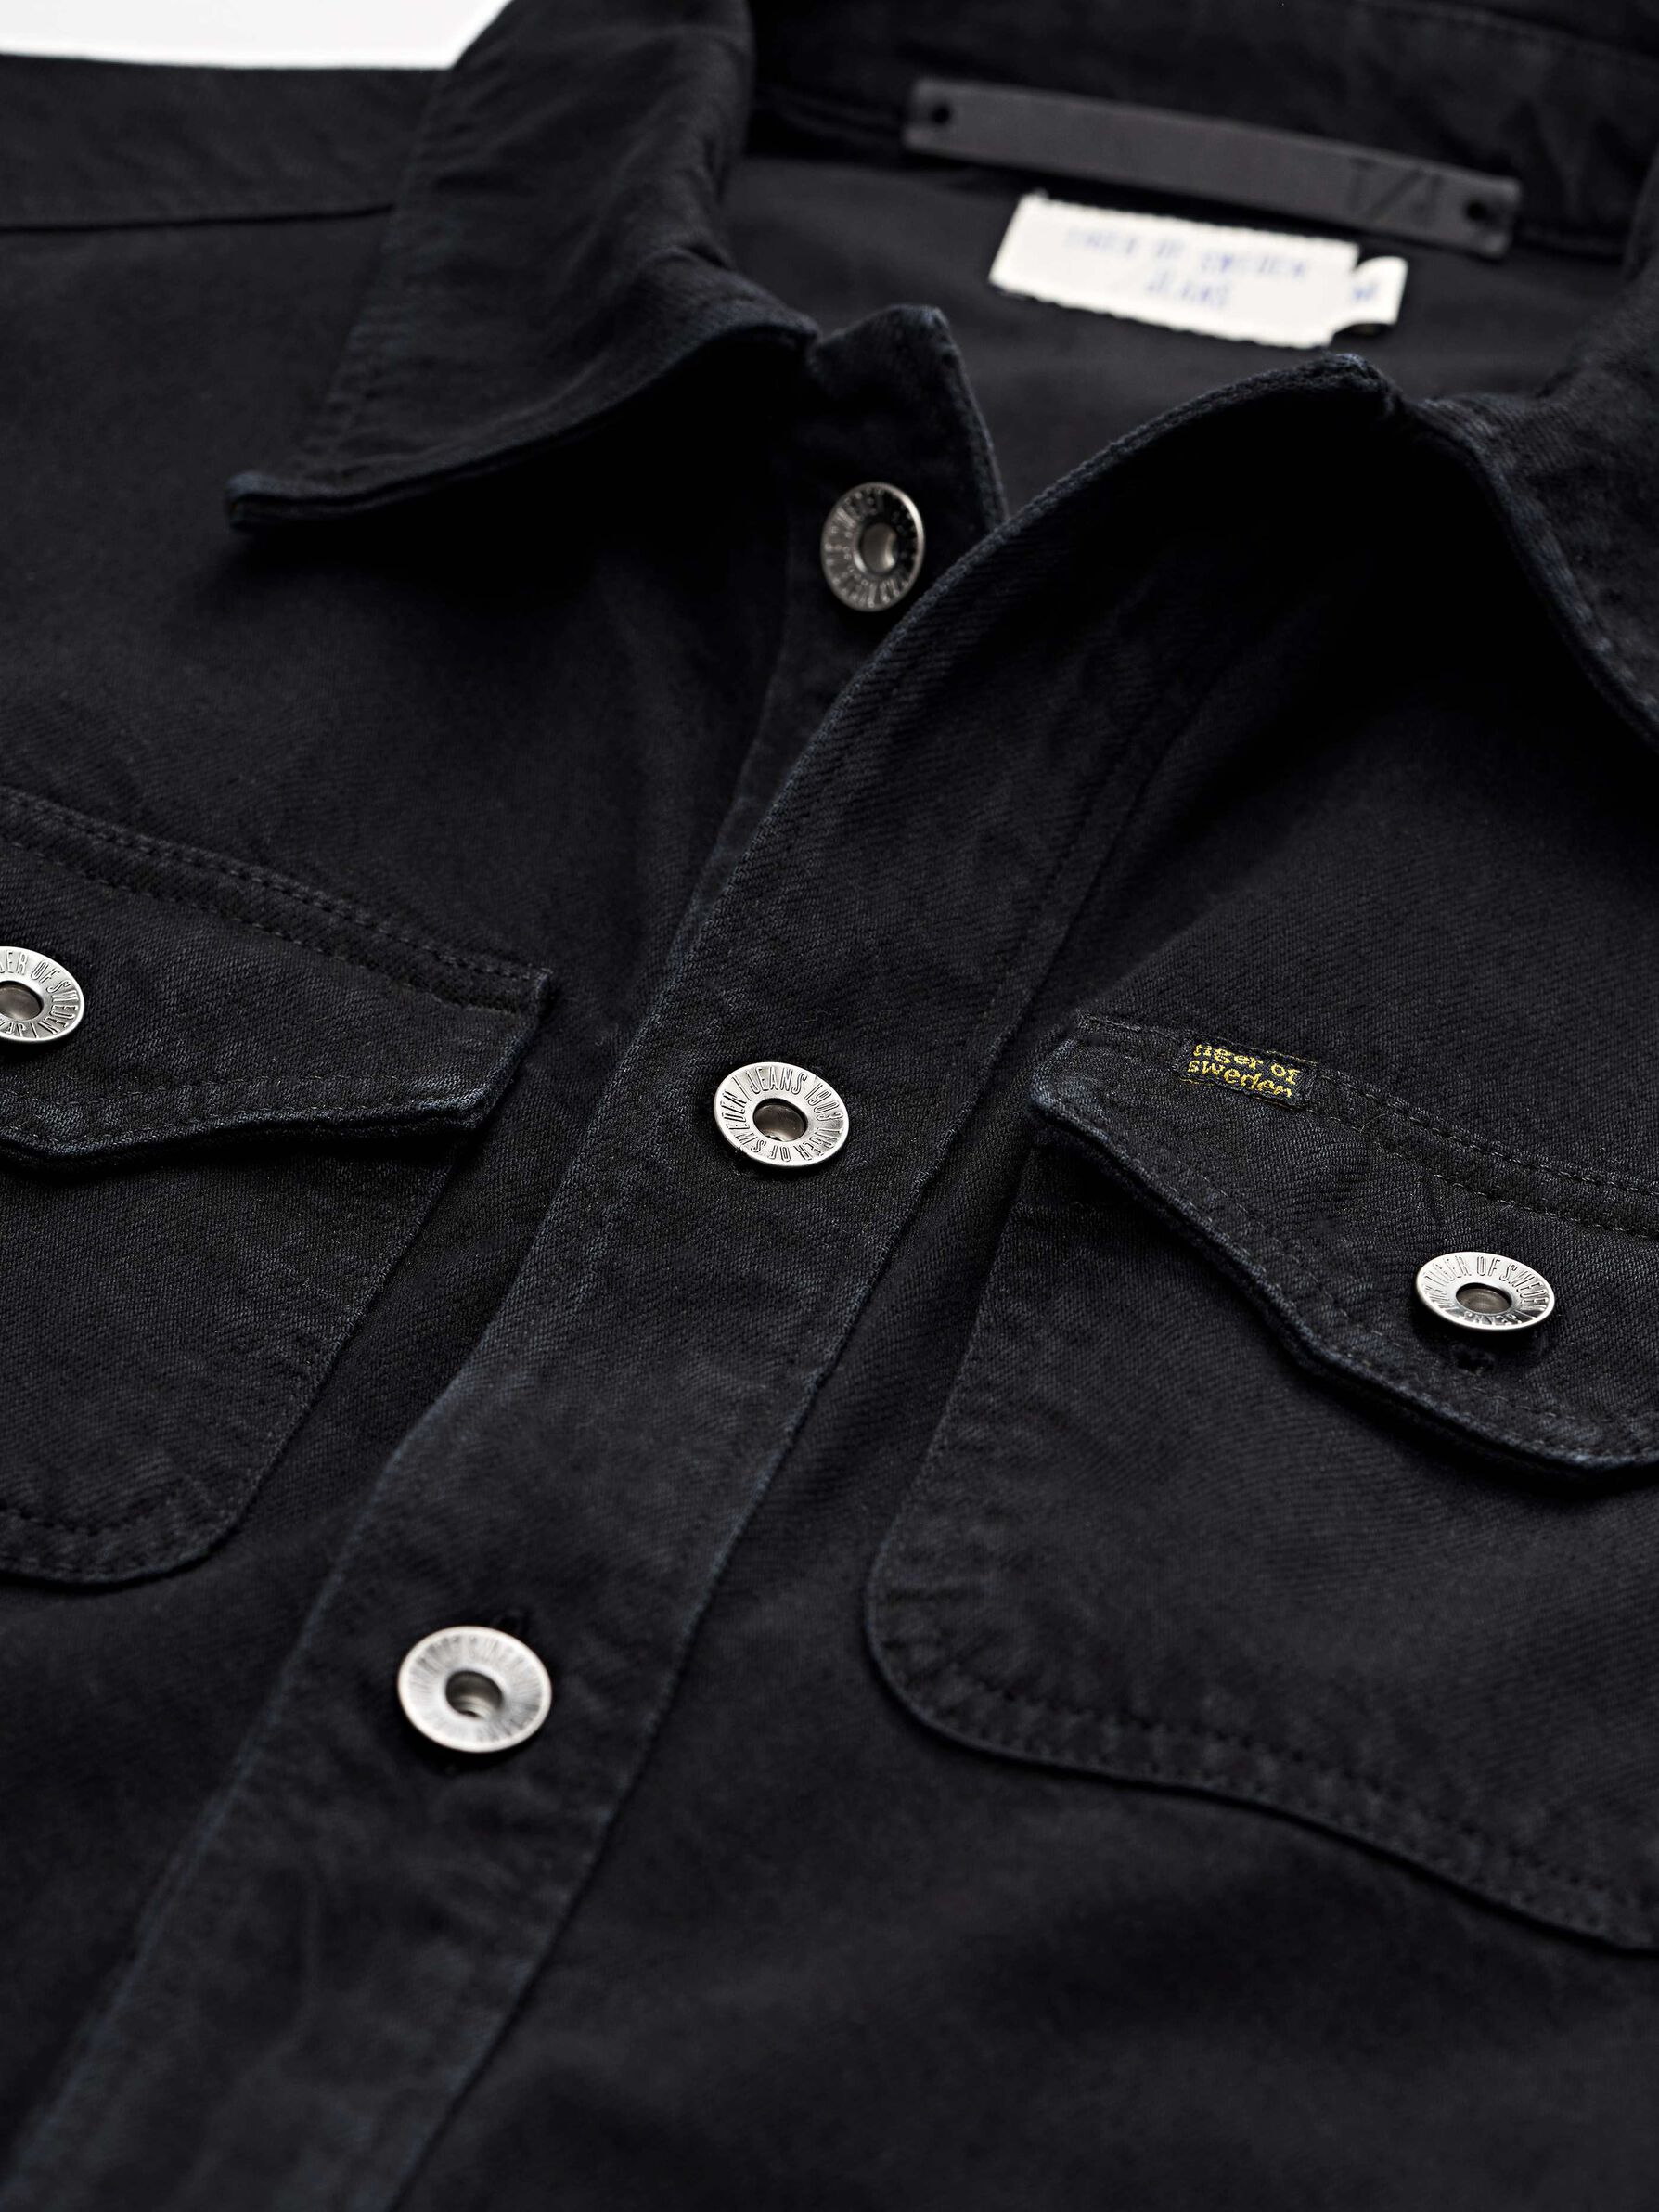 Buy Tiger Jeans Get Jacket Black | Scandinavian Fashion Store